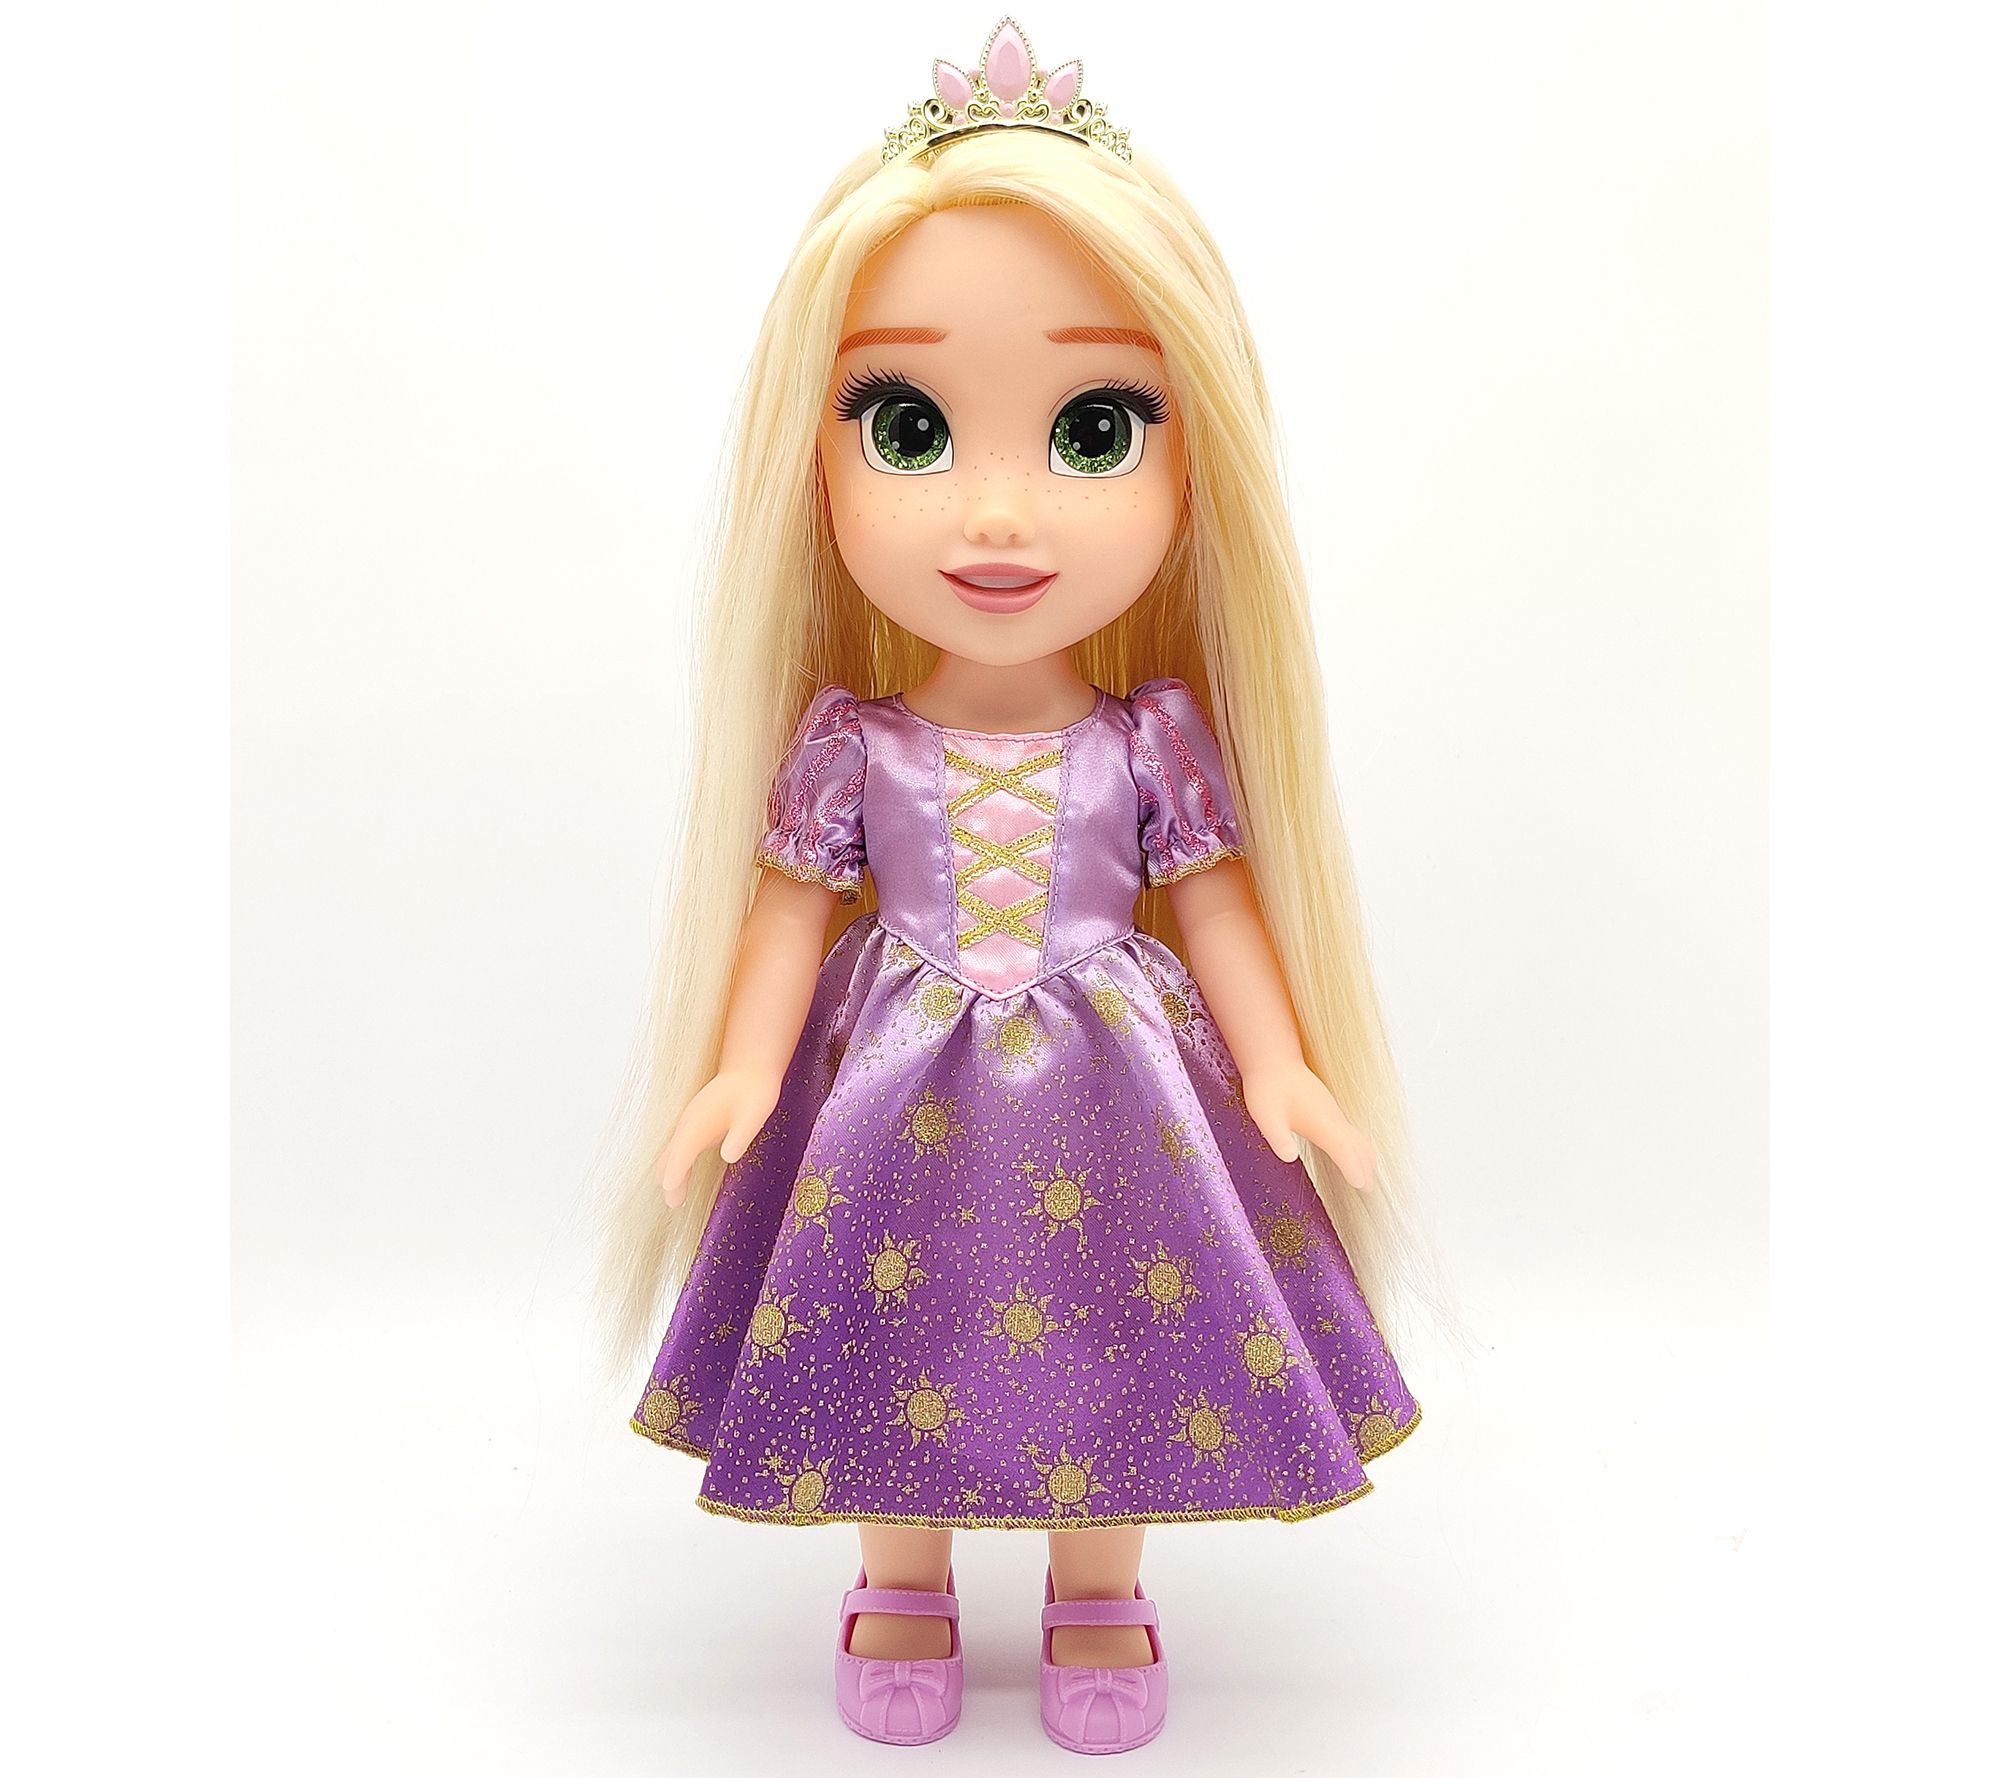  Disney Princess Enchanted Hair Rapunzel Doll : Toys